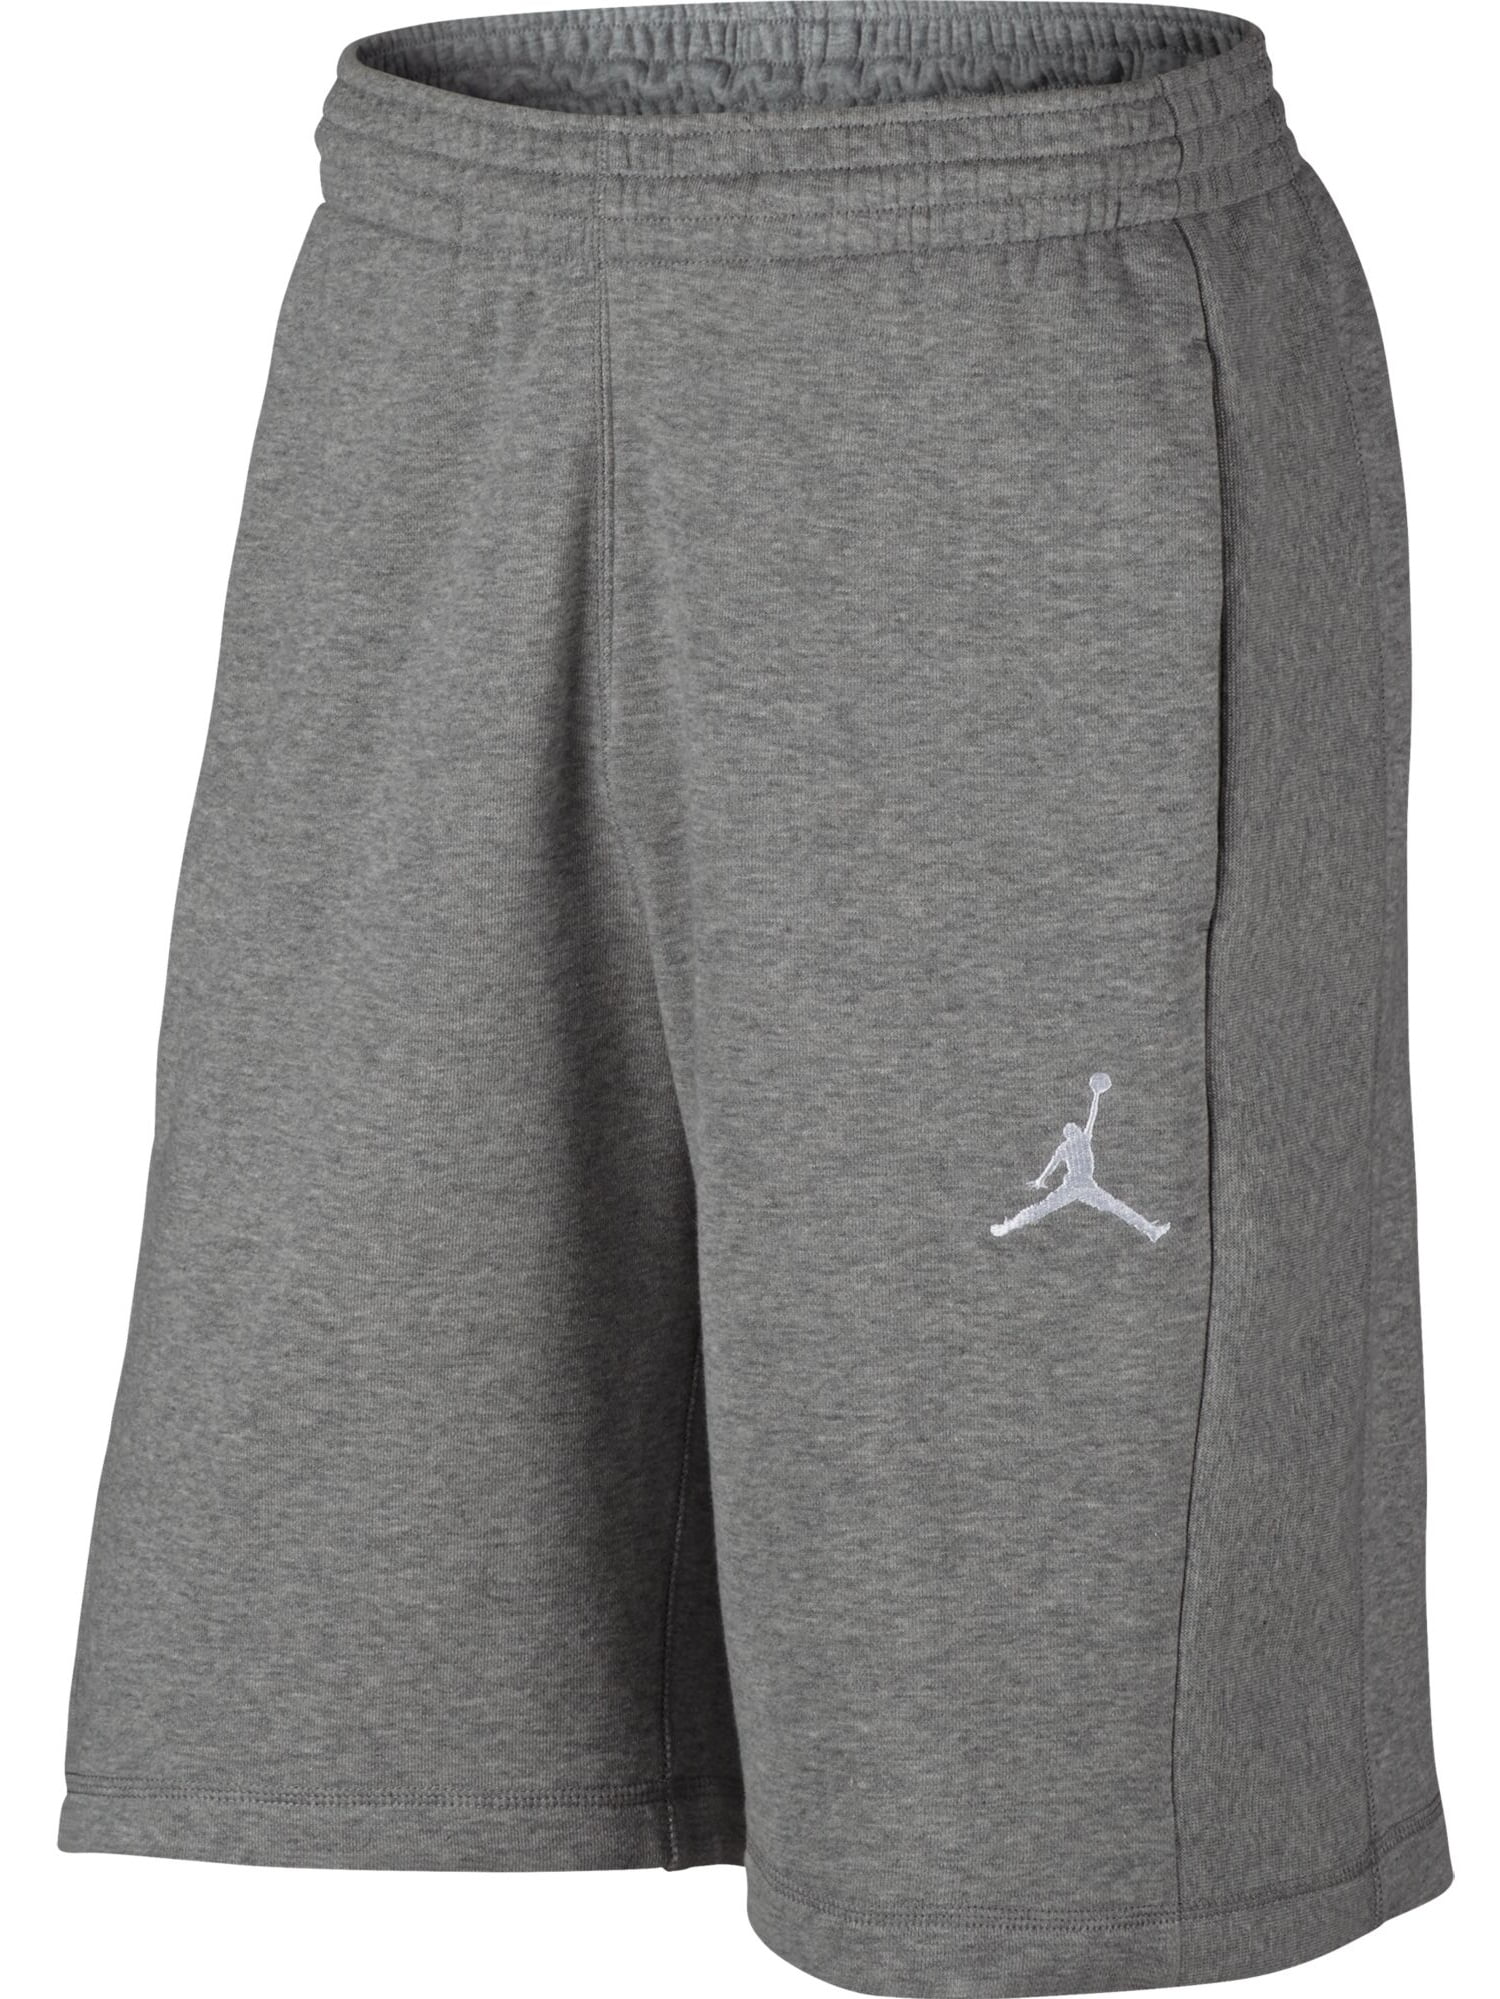 Jordan Flight Lite French Terry Men's Shorts Grey 809454-063 - Walmart.com